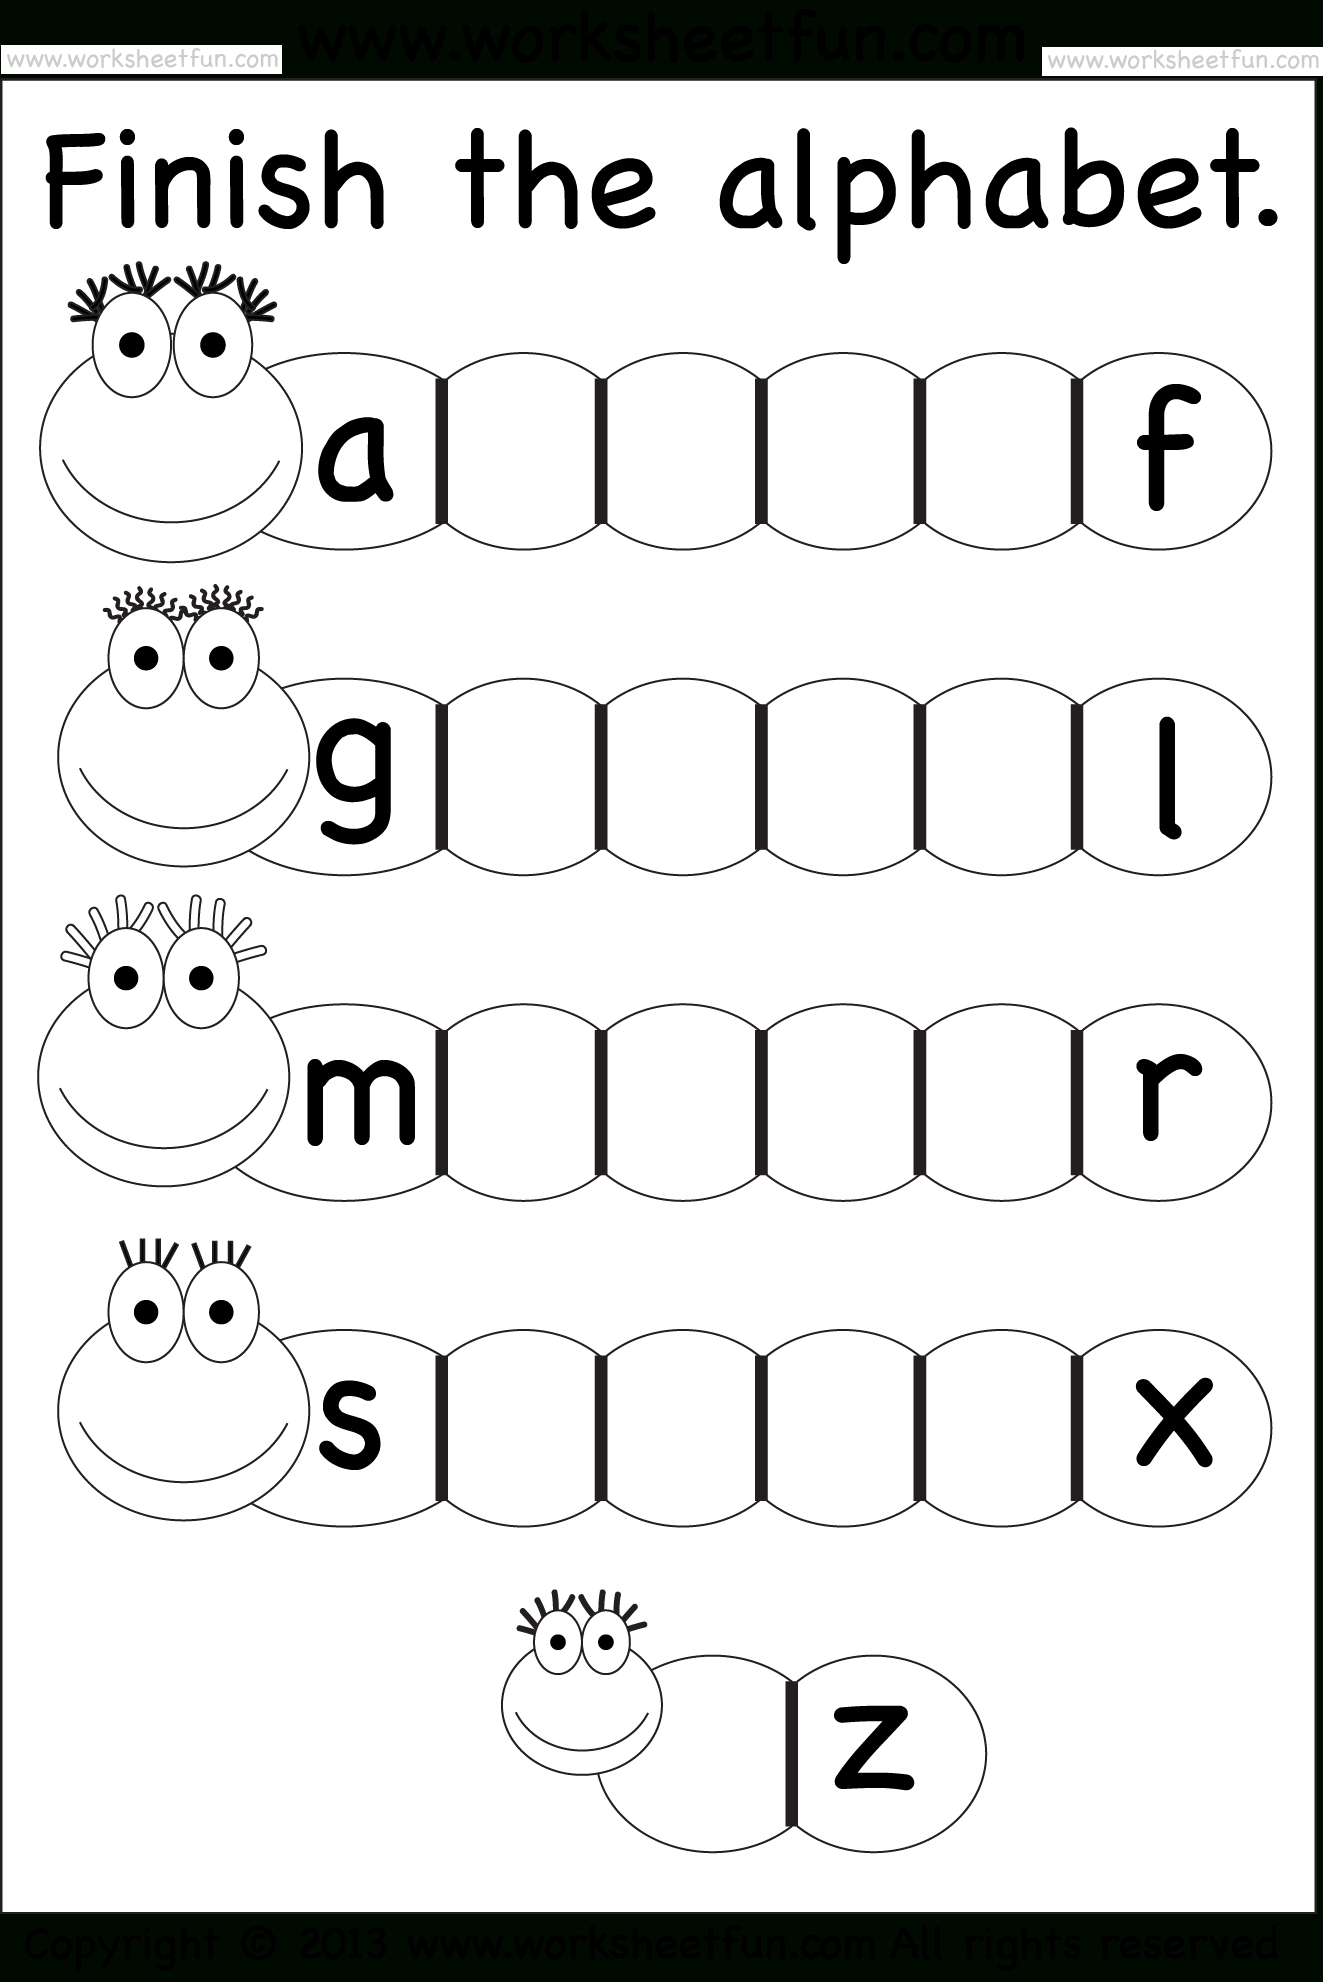 Free Printable Alphabet Worksheets For Grade 1 | Download within Alphabet Worksheets For Grade 1